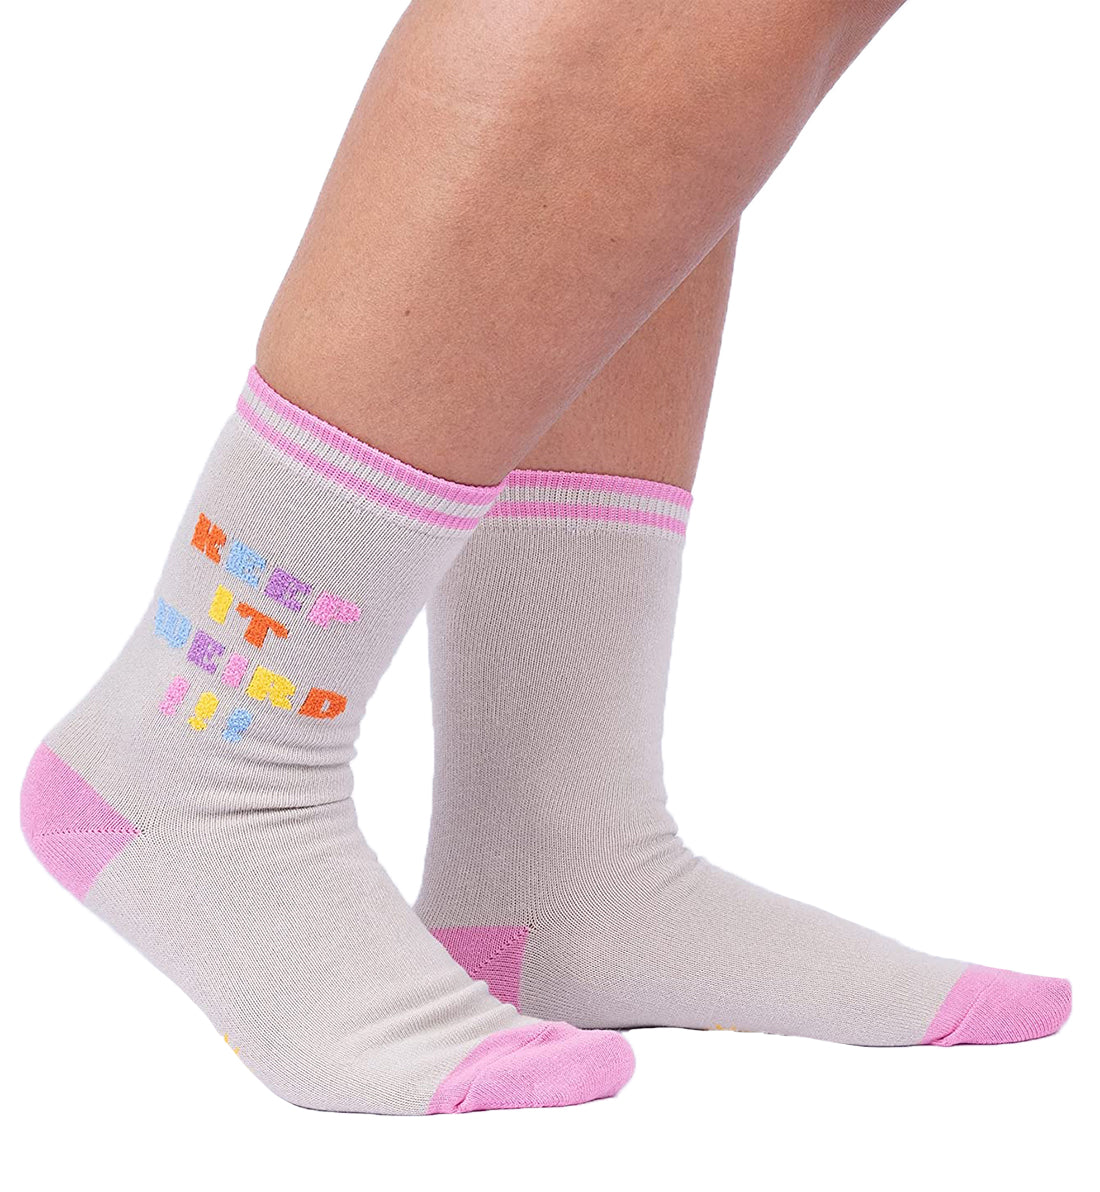 SOCK it to me Women's Crew Socks (W0419),Keep It Weird! - Keep It Weird!,One Size